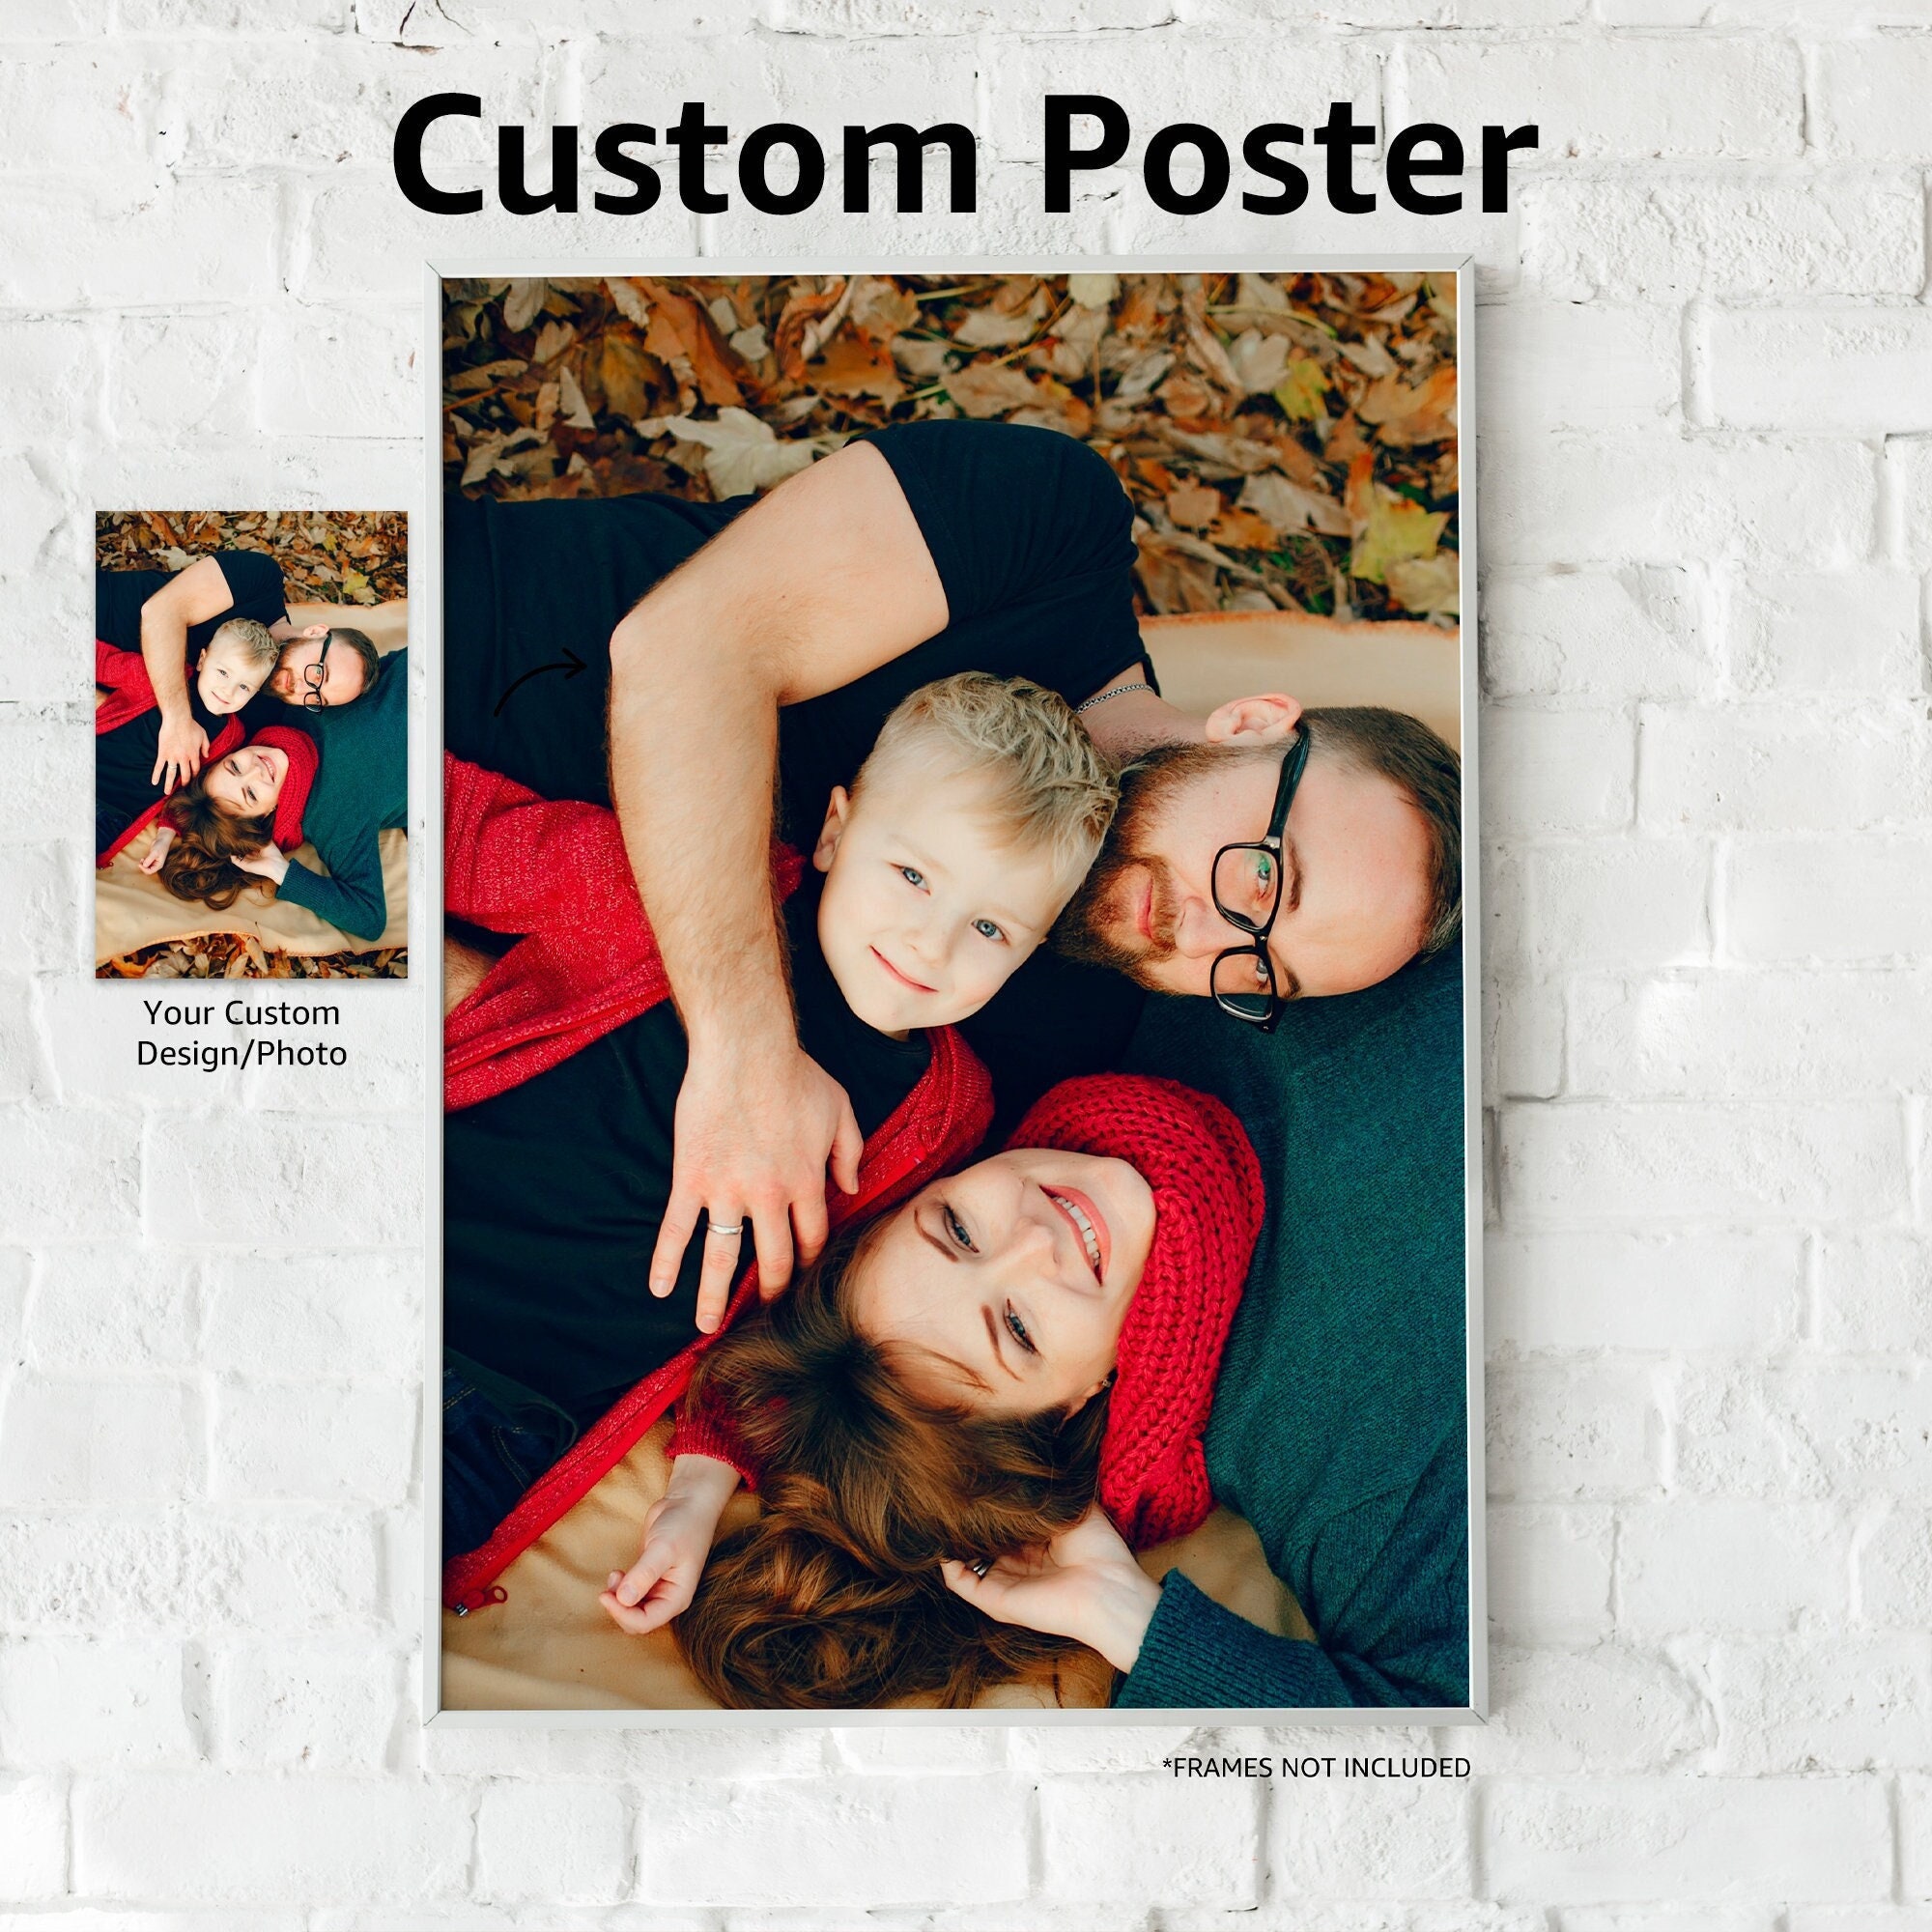 Custom Poster, Custom Printing Services, Fulfillment Services, Dropship  Poster Printing, Printing Services. 